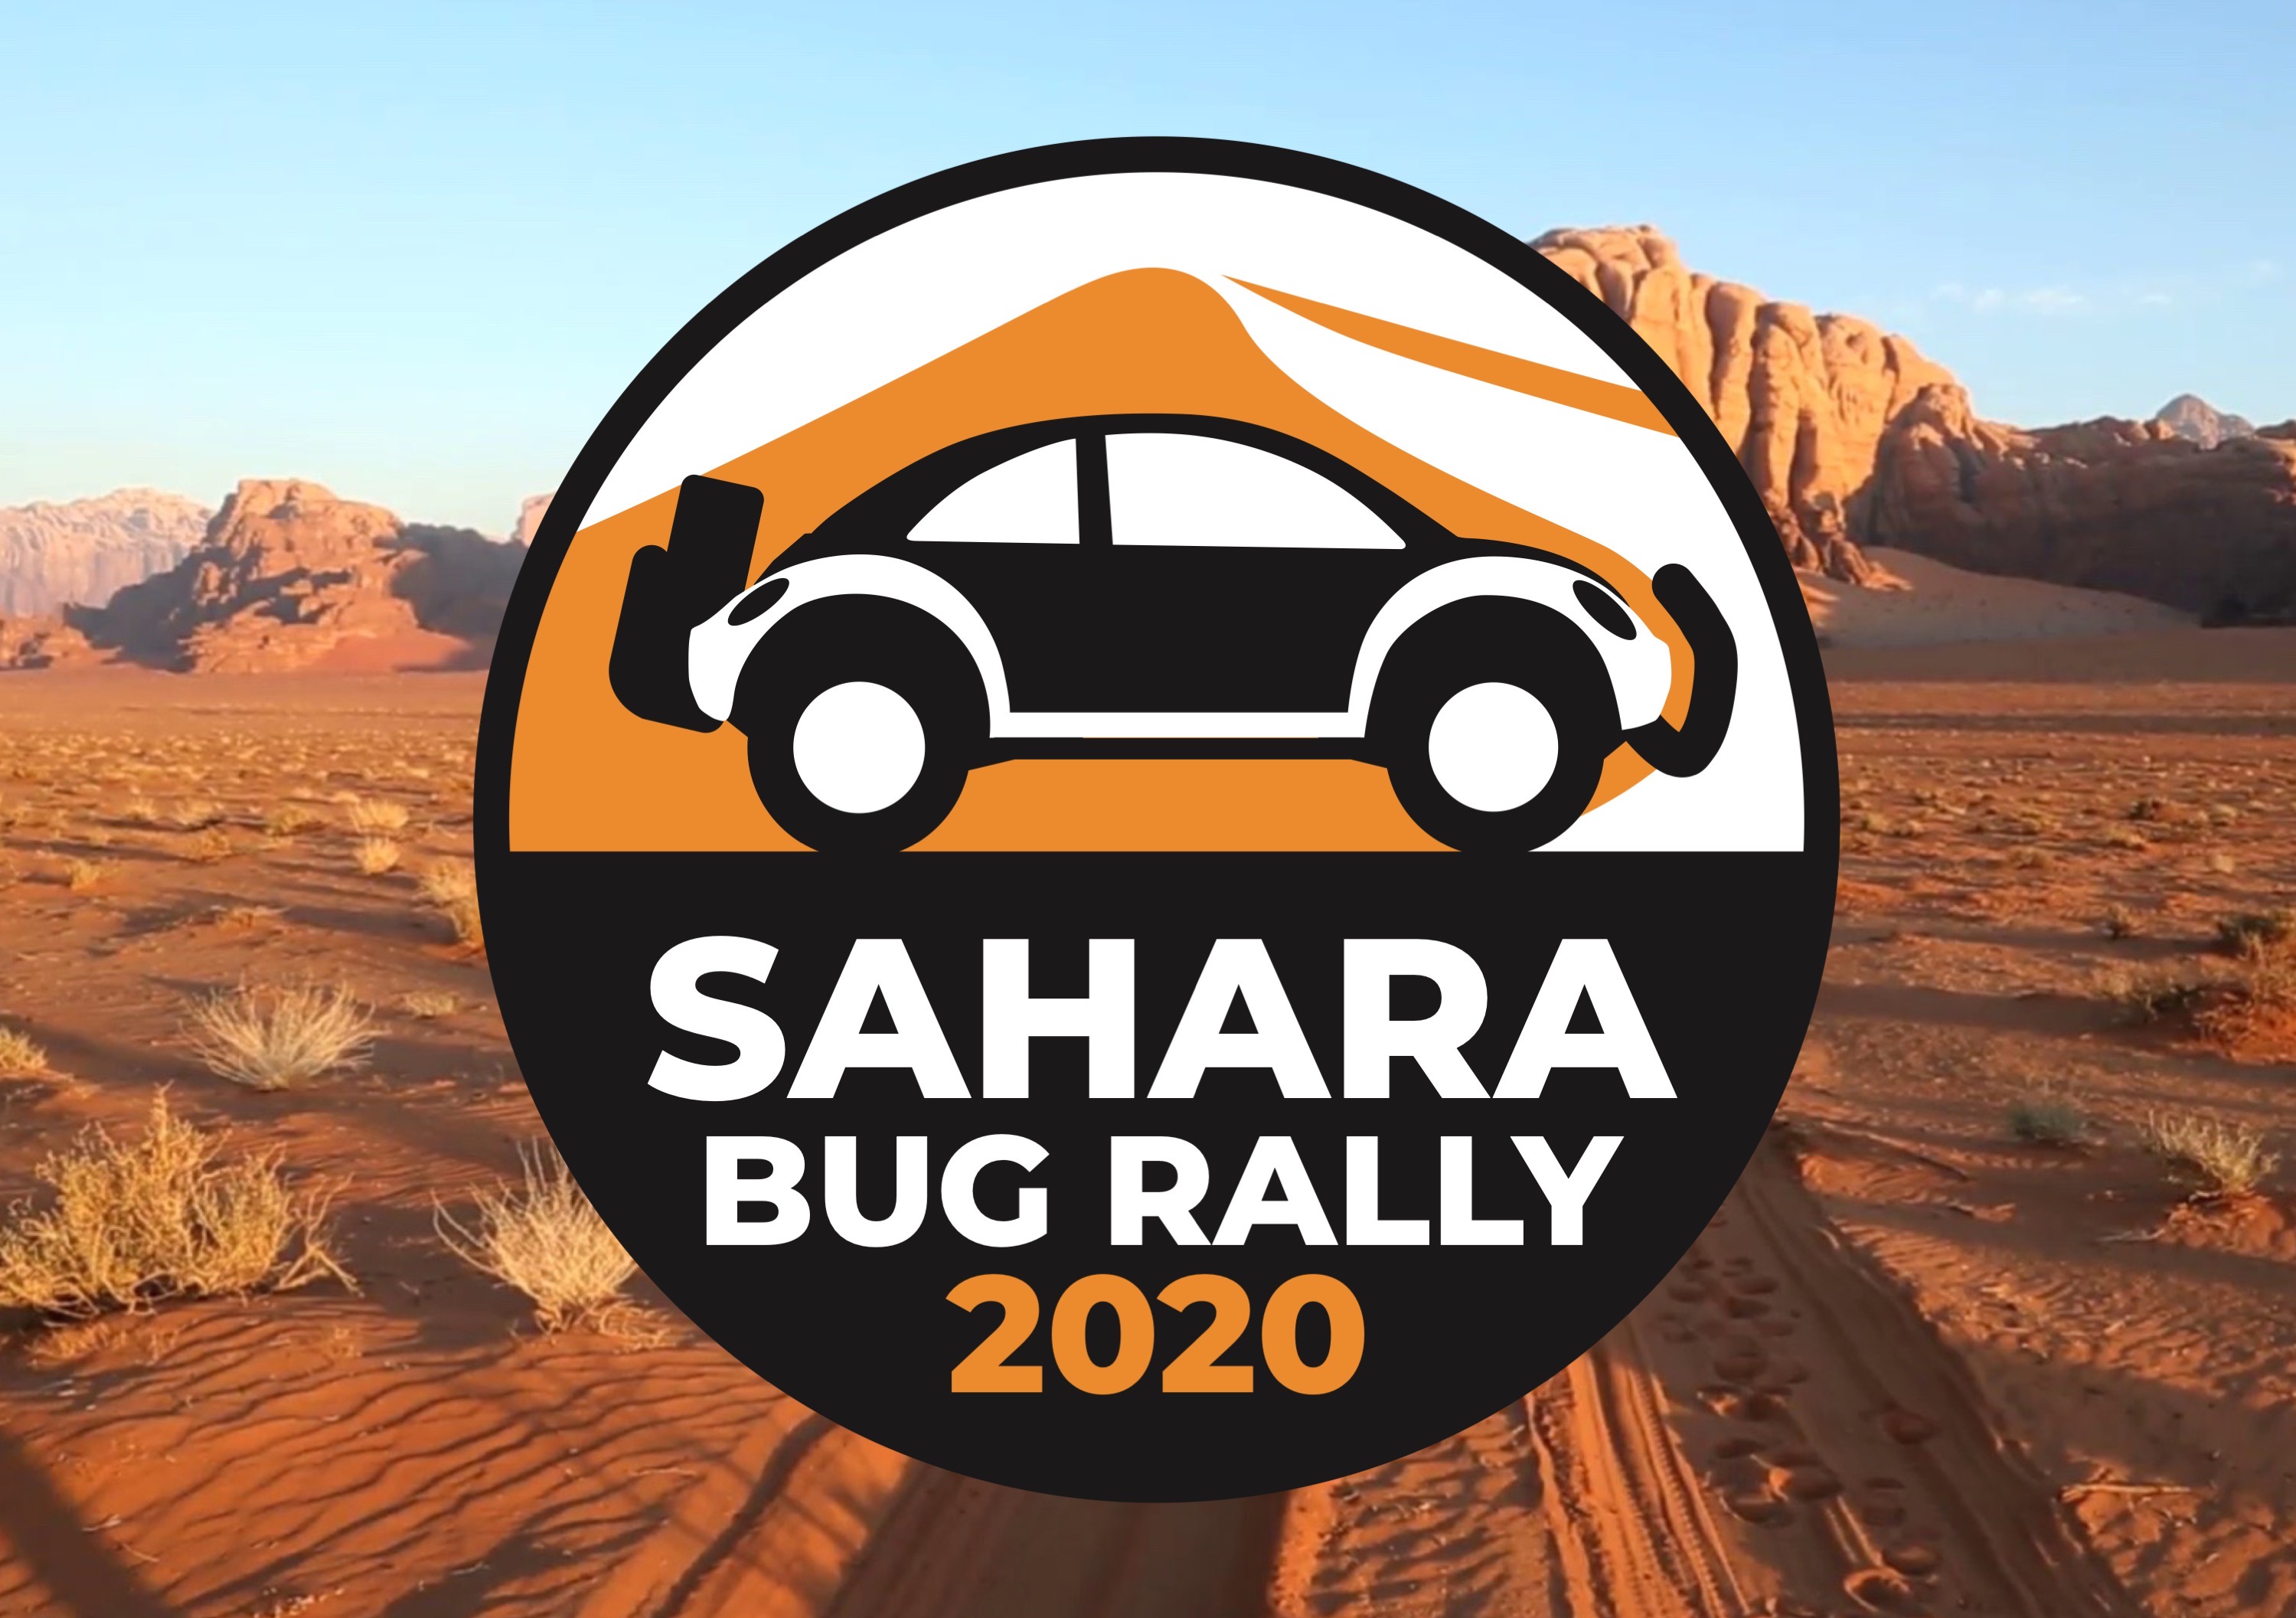 Sahara rally, Bugs across the Sahara rally planned for 2020, ClassicCars.com Journal